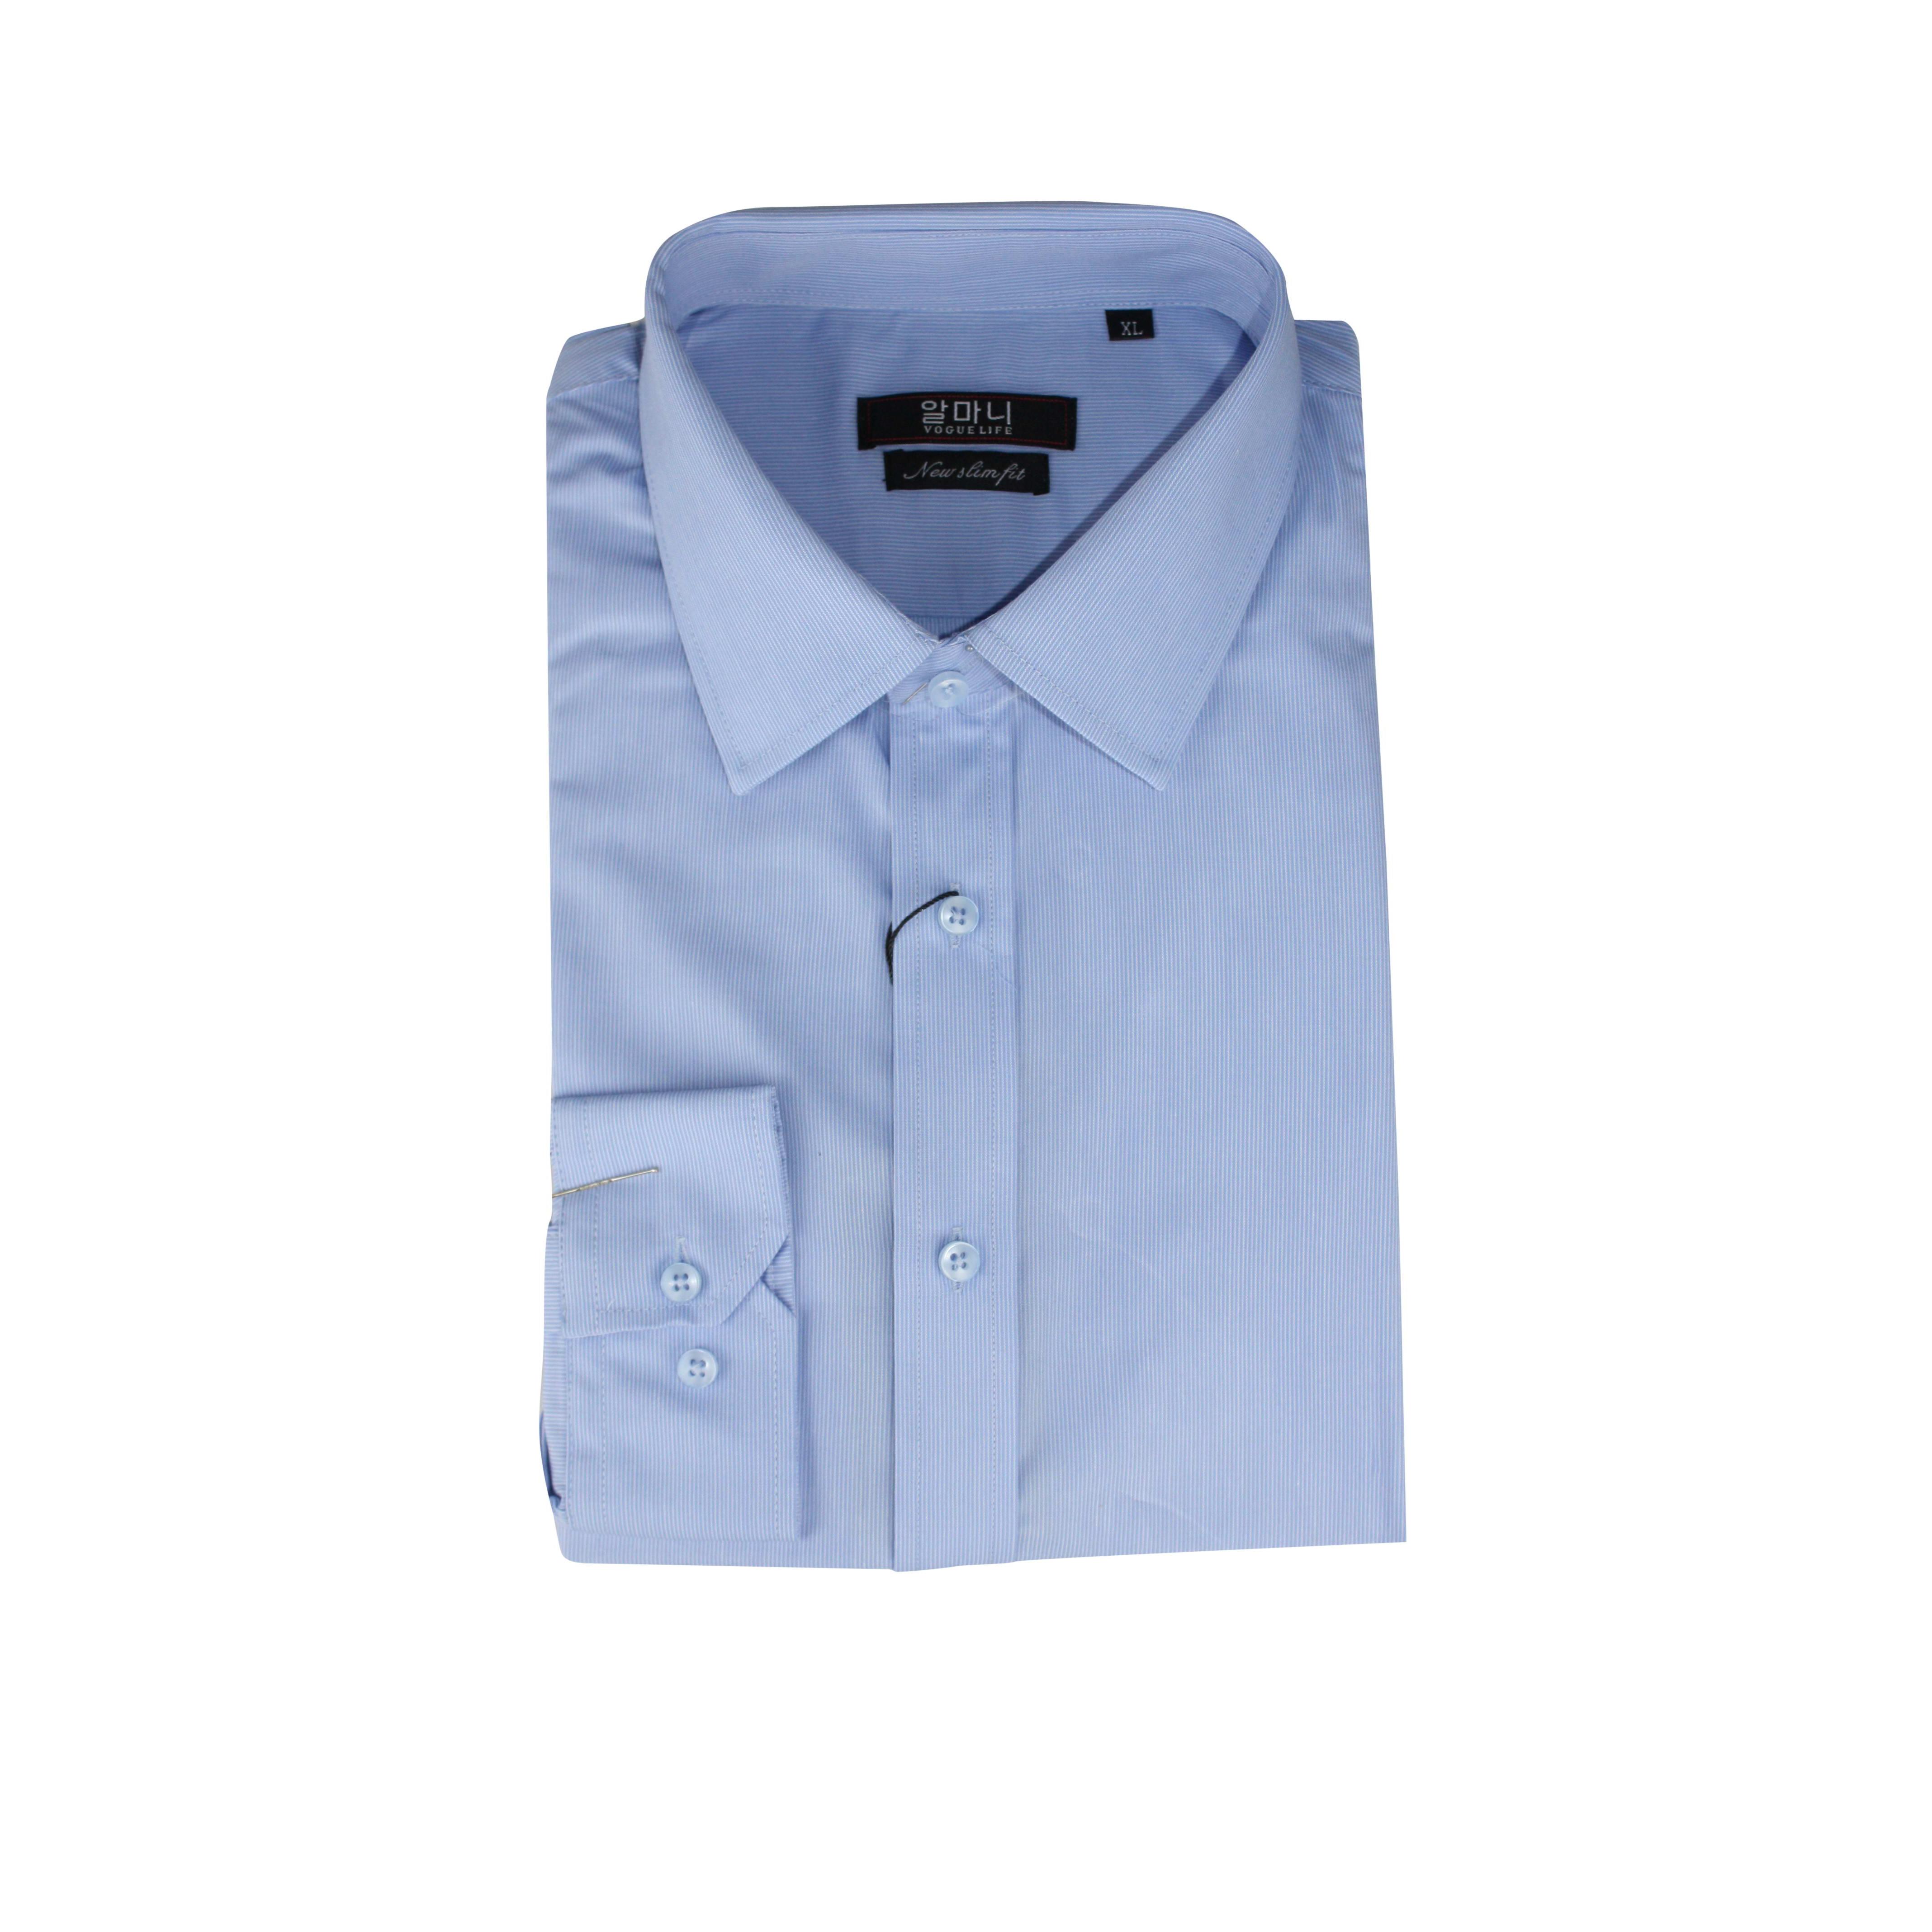 Mens White Stripes Light Blue Shirt Long Sleeve With Tie Set